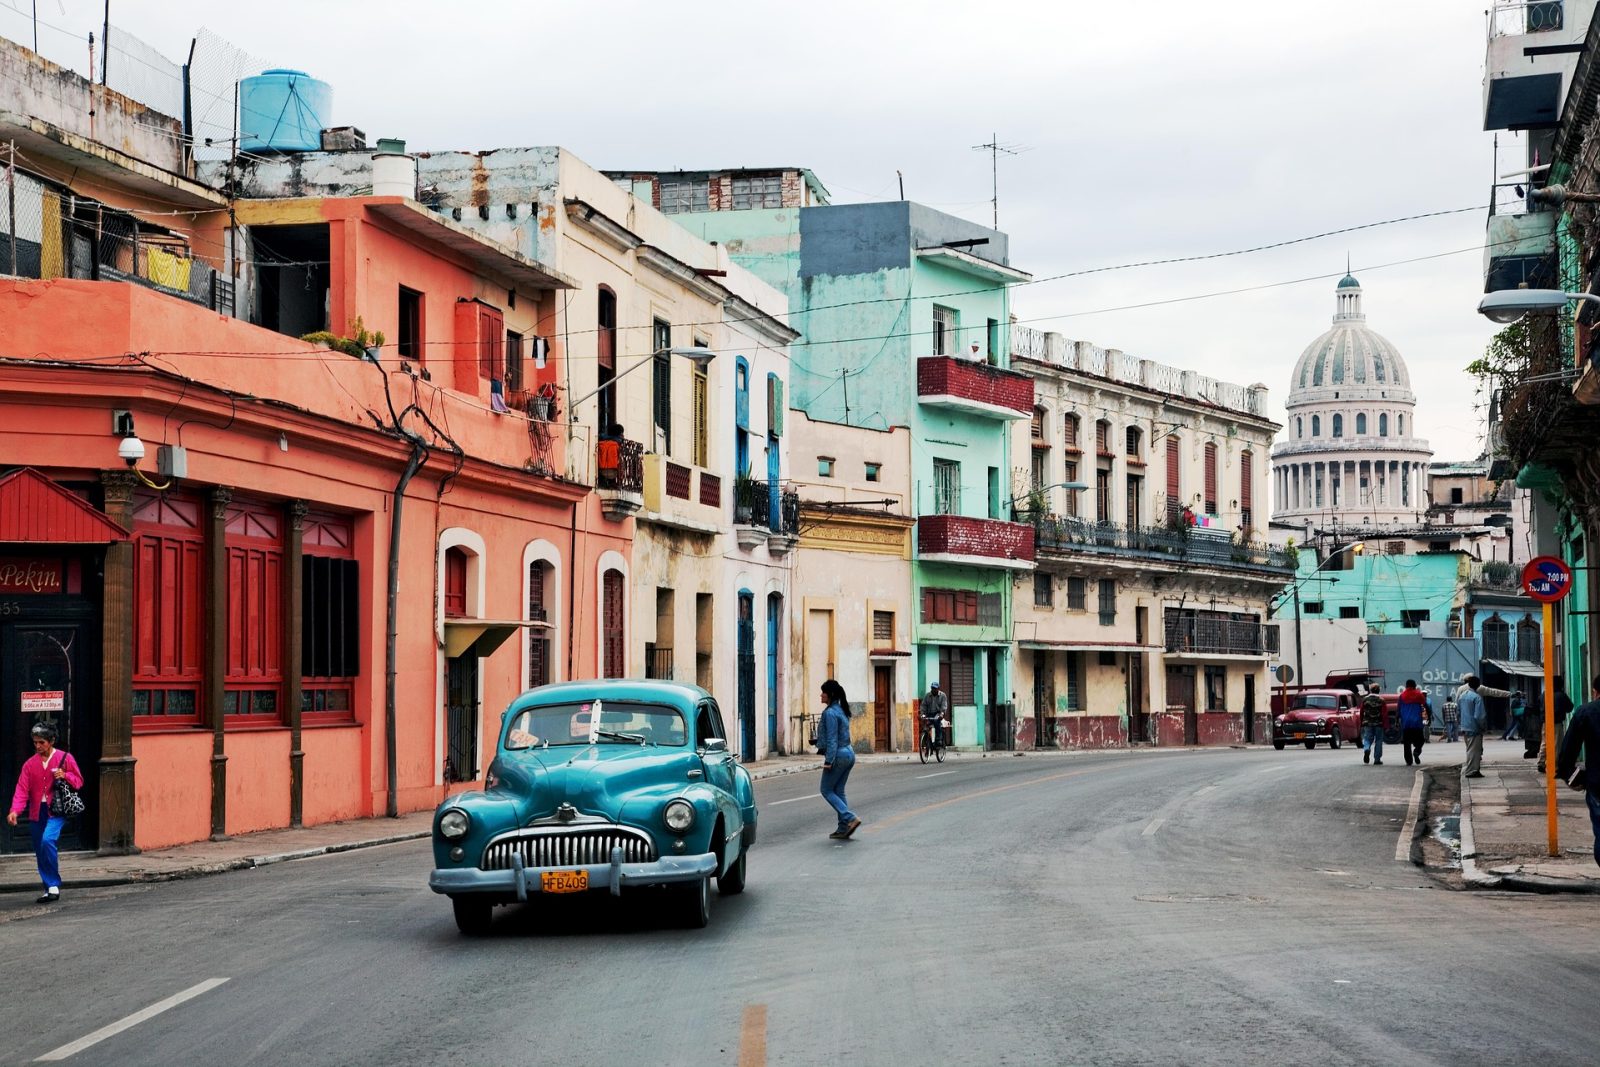 More than 100,000 Cubans adopt crypto